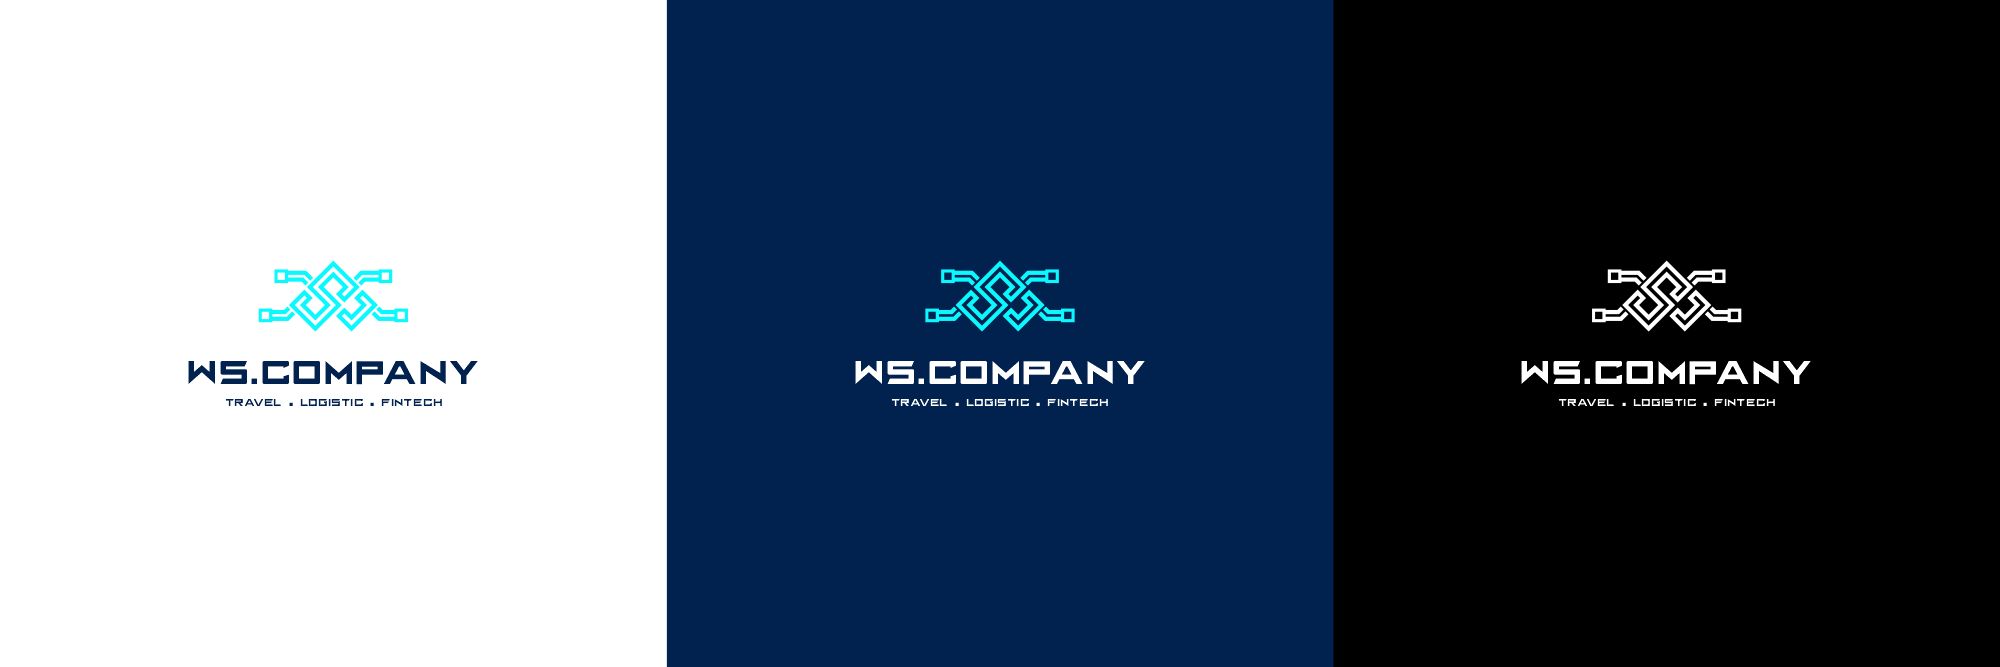 Логотип для WS.Company — Travel - Logistic - Fintech - дизайнер markosov